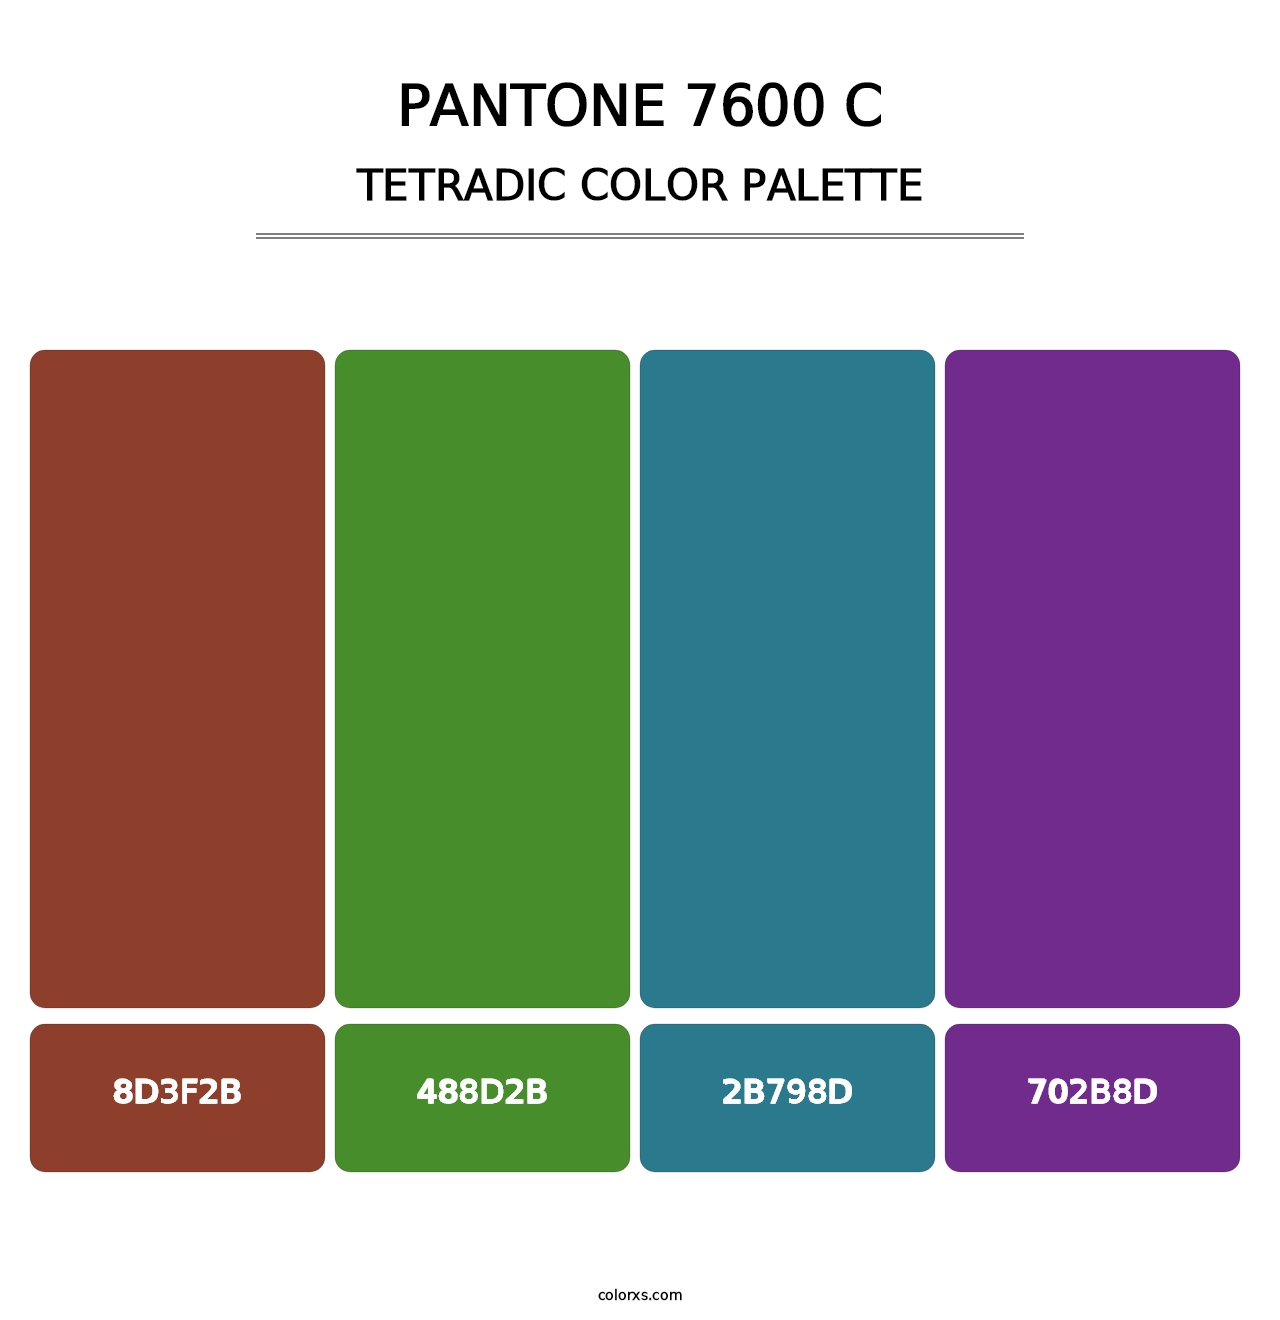 PANTONE 7600 C - Tetradic Color Palette